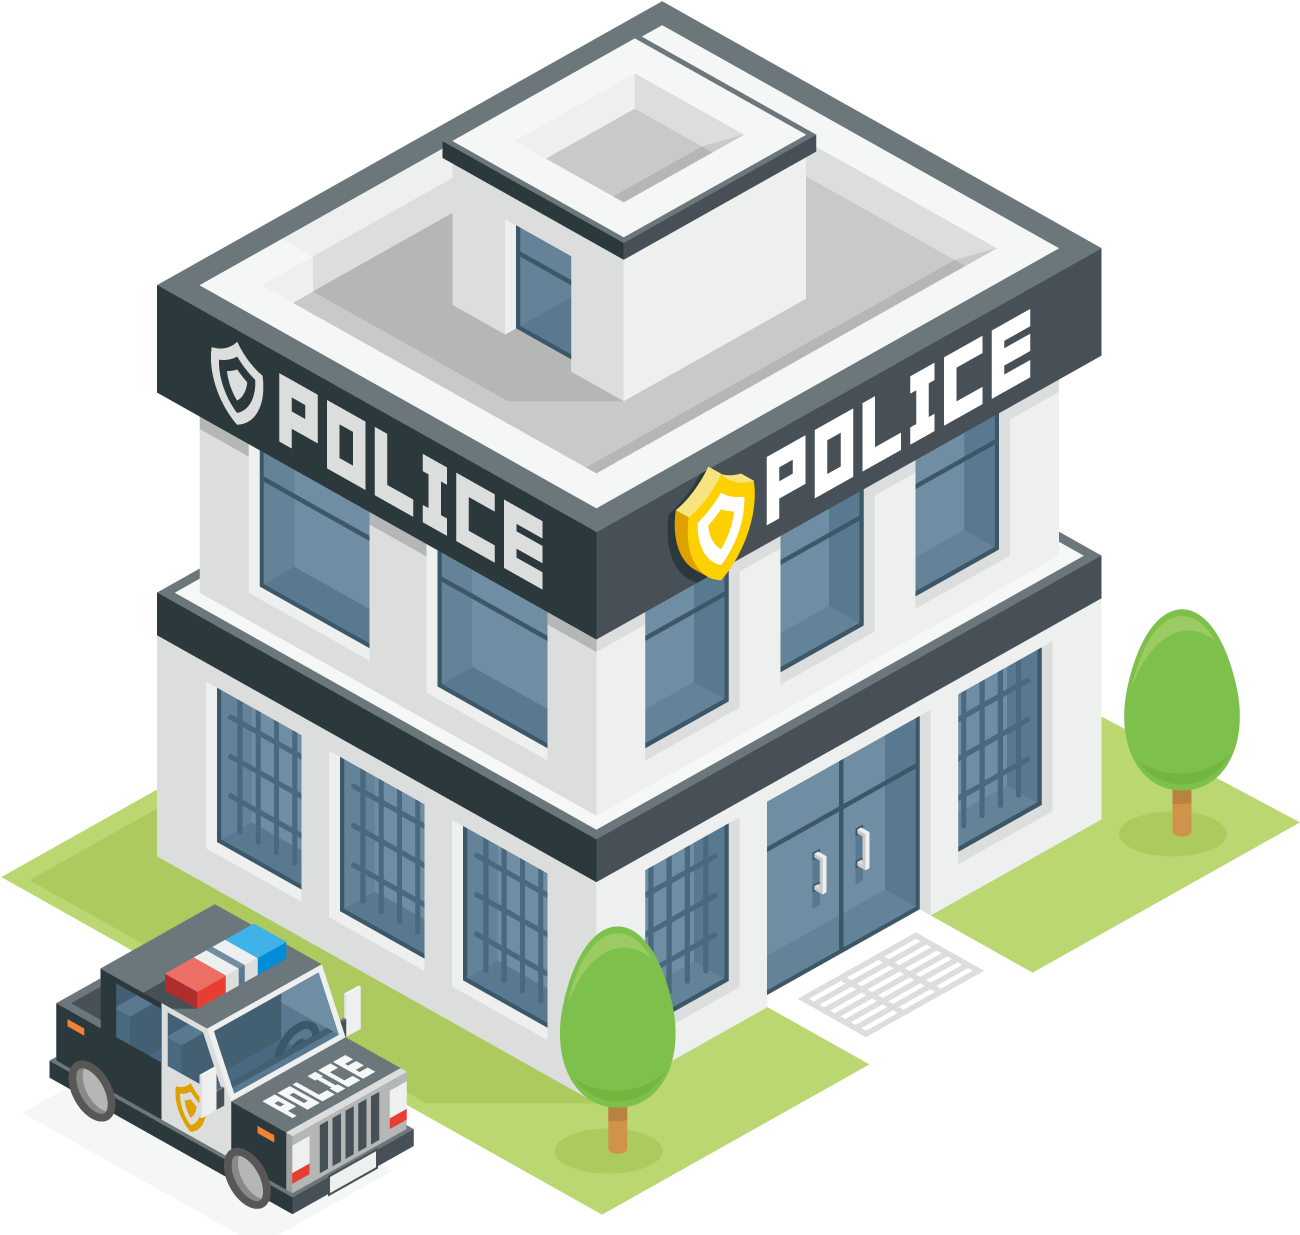 Police Station Police Officer Clip Art - Police Station Police Officer Clip Art (1500x1500)